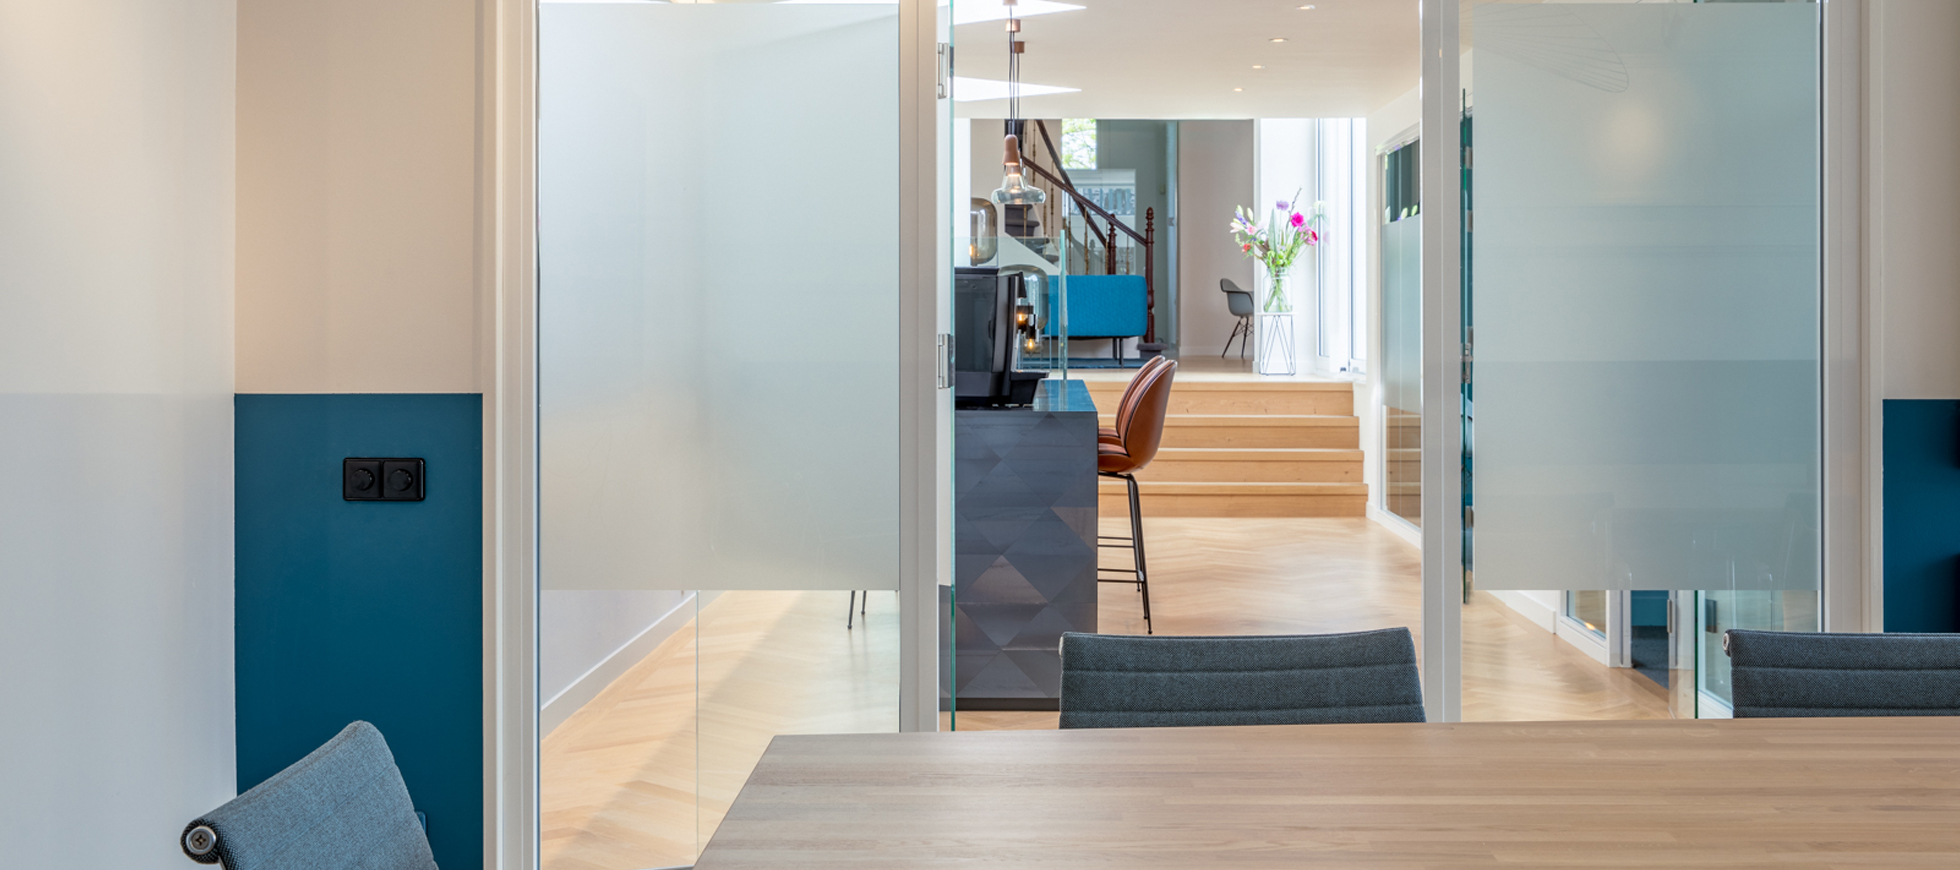 https://www.heyligersarchitects.nl/wp-content/uploads/2021/10/wijnstael-kantoor-office-concept-interior-interieur-heyligers-10.jpg